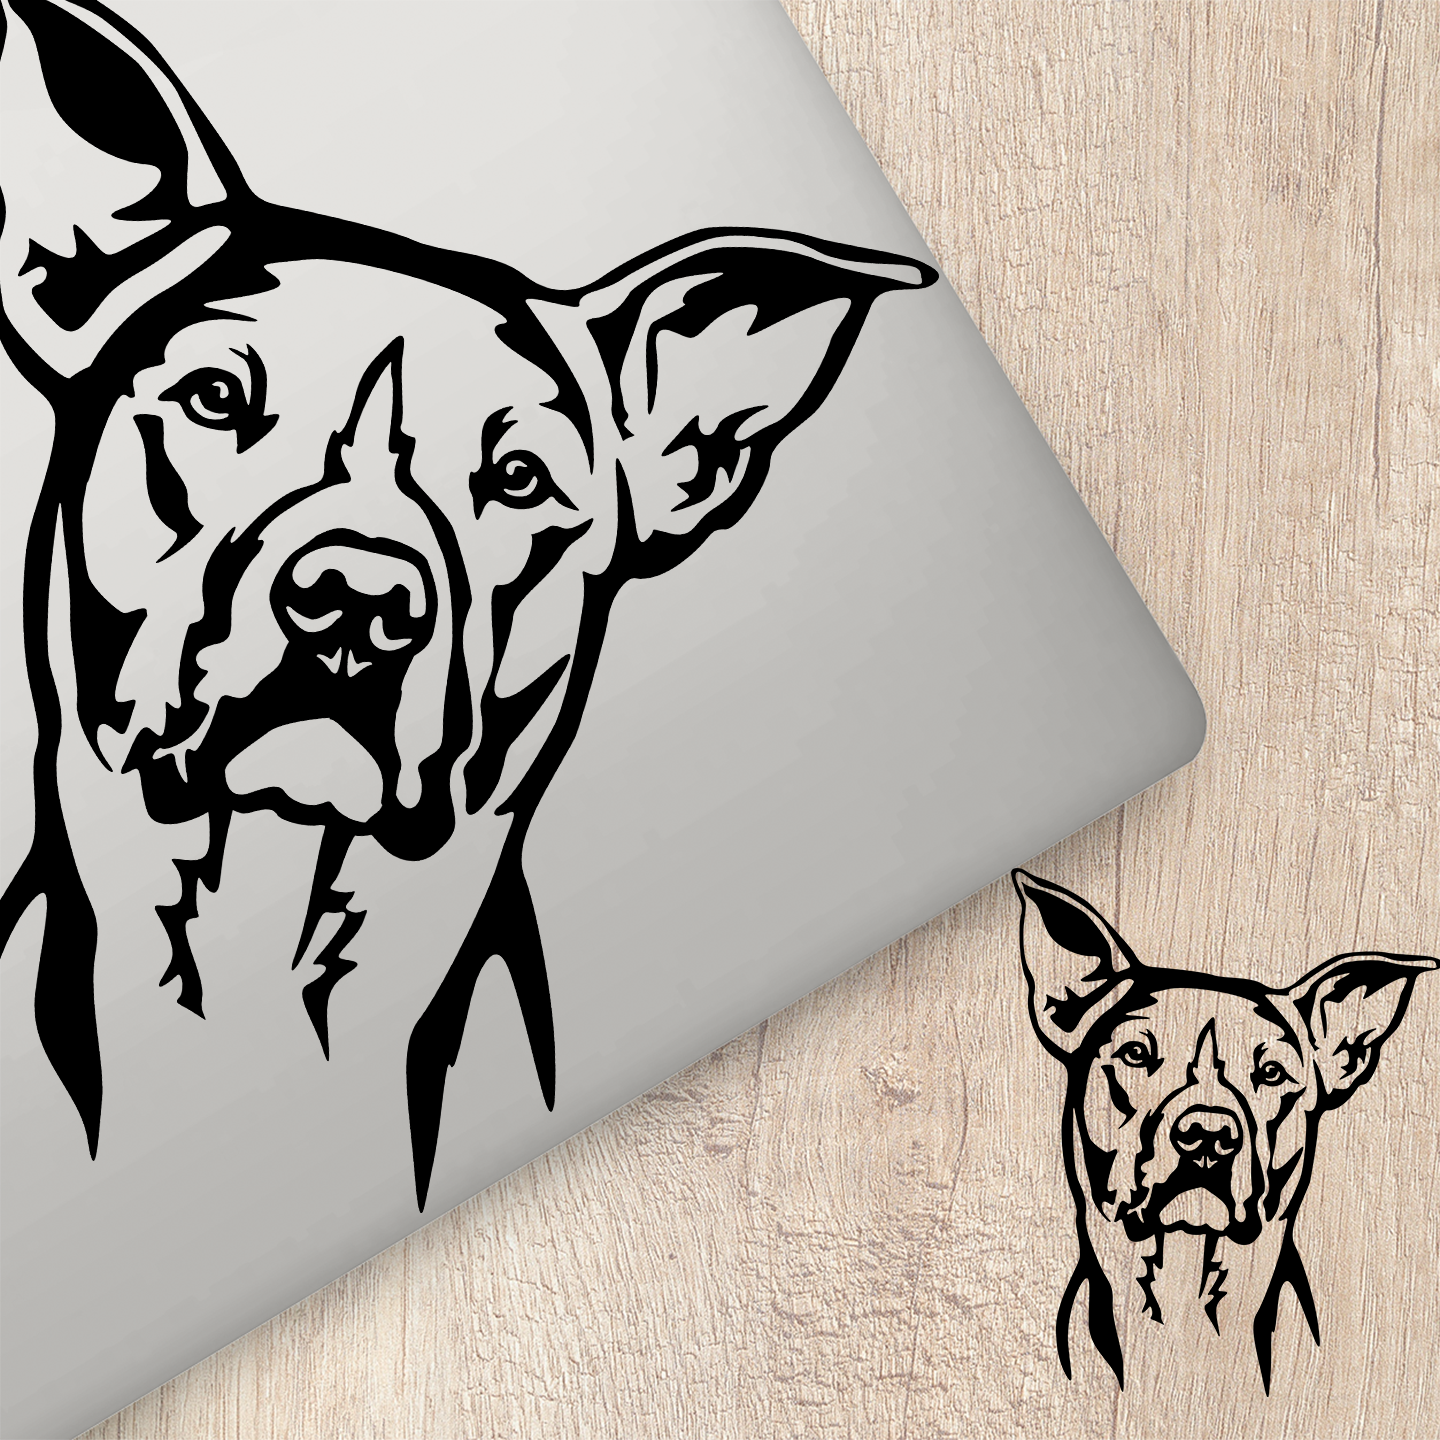 American Pit Bull Terrier Sticker